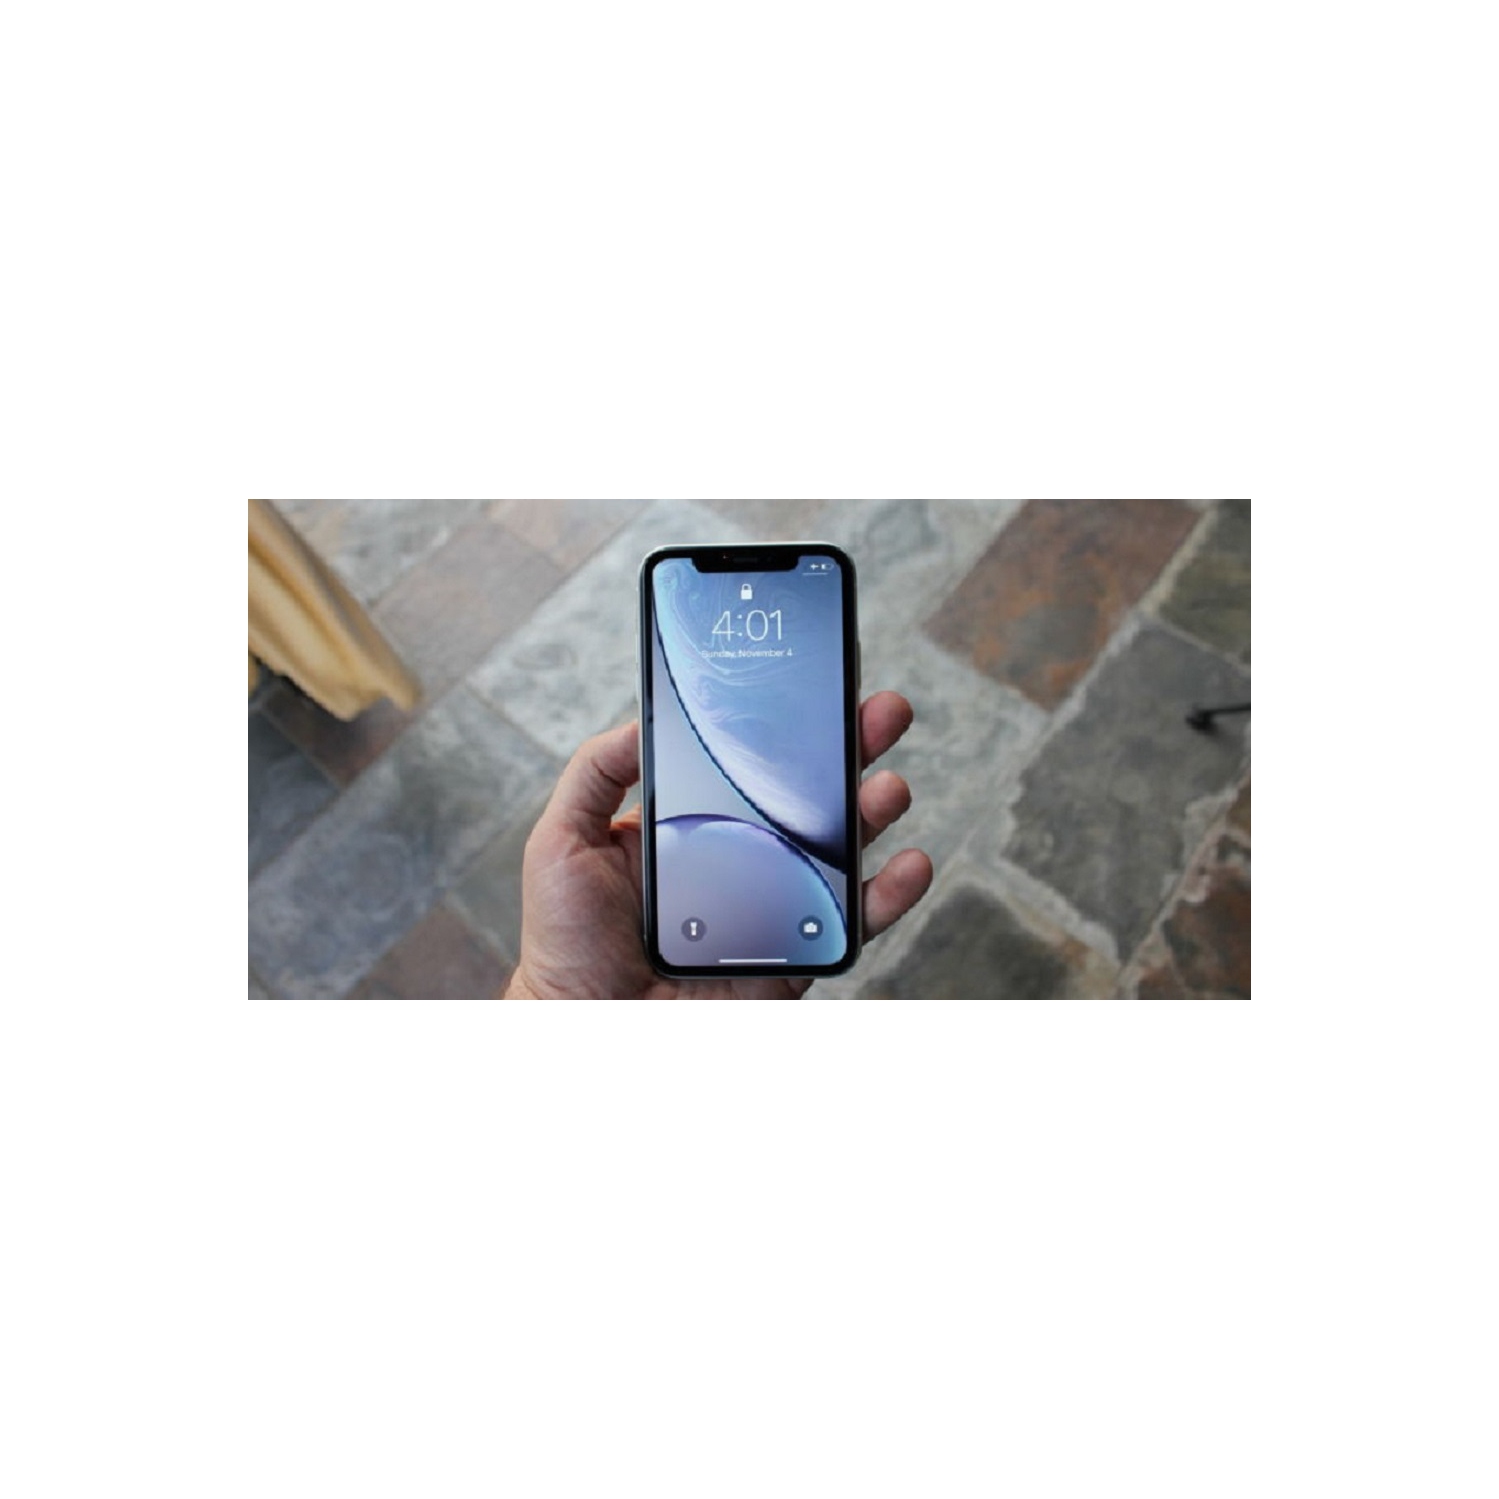 Apple iPhone XR 64GB Smartphone - White - Unlocked - Open Box 